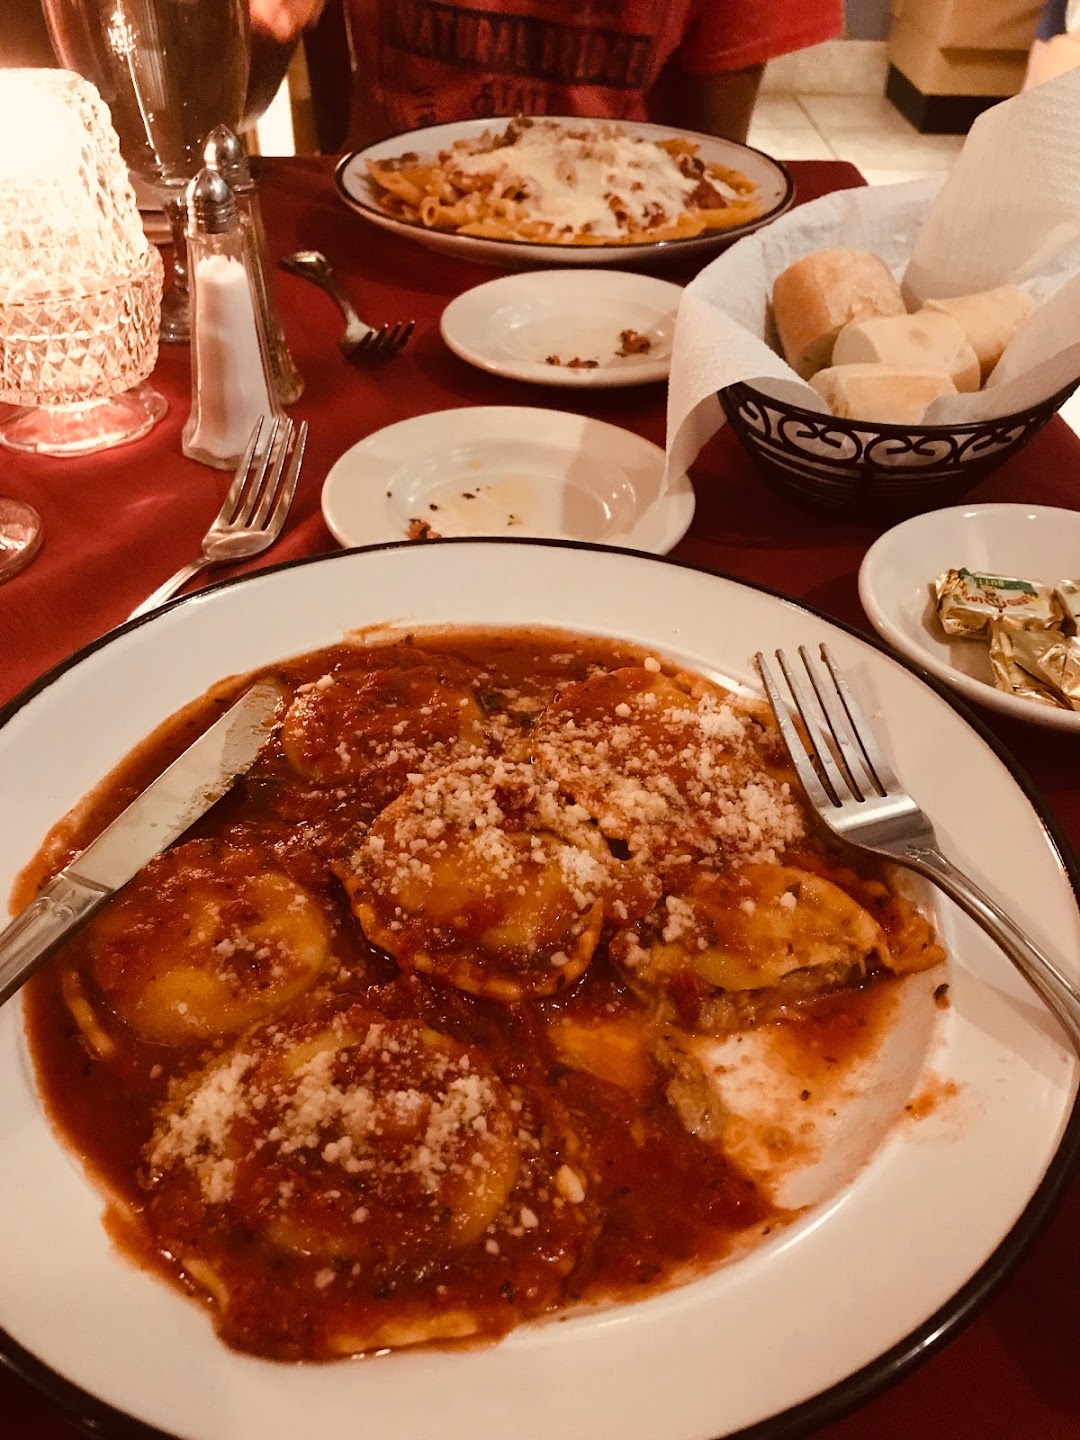 Giovannis Italian Restaurant